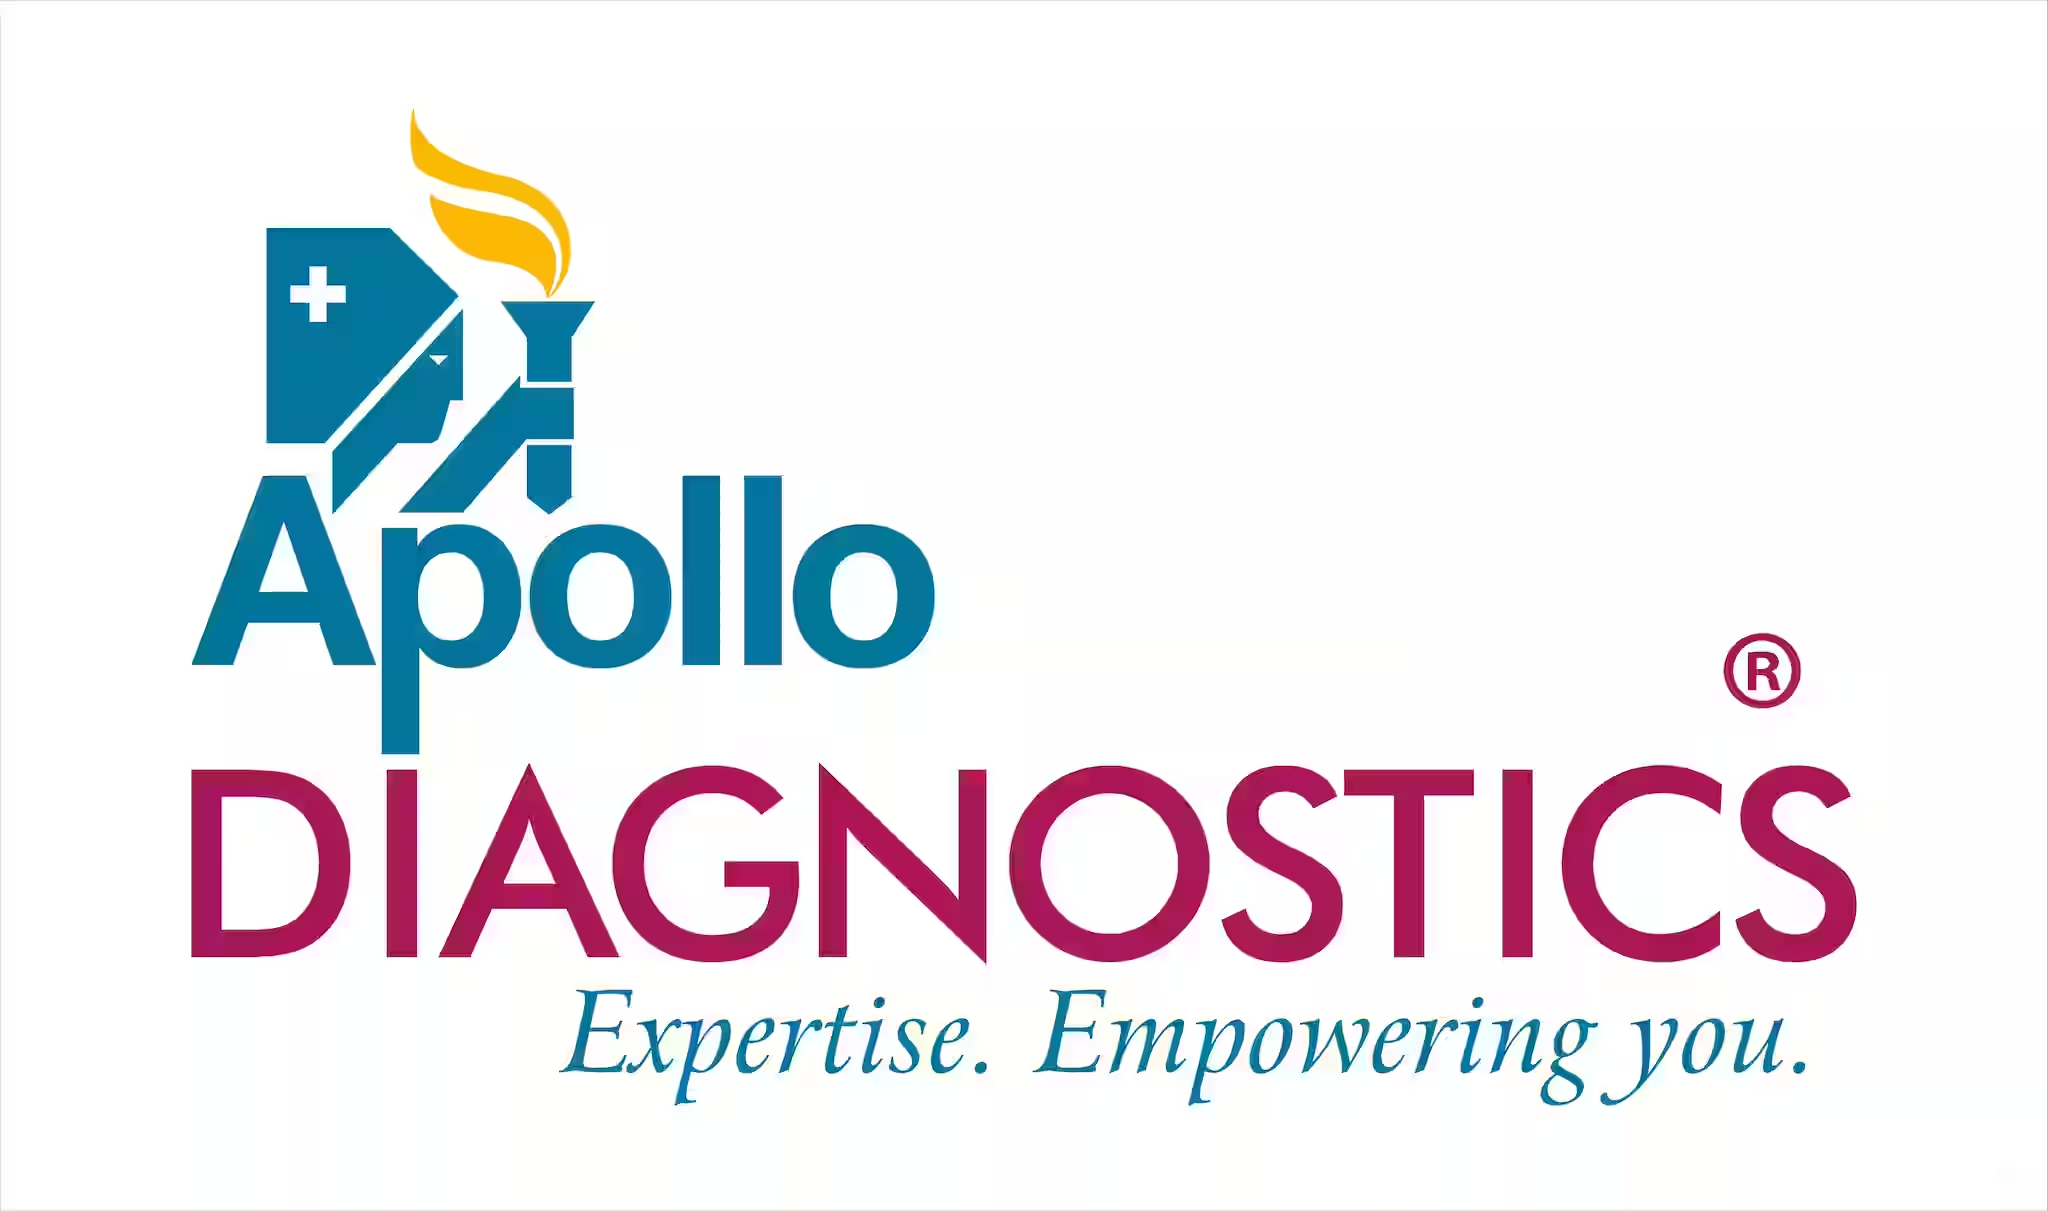 subsidiaries-products-Apollo Diagnostics